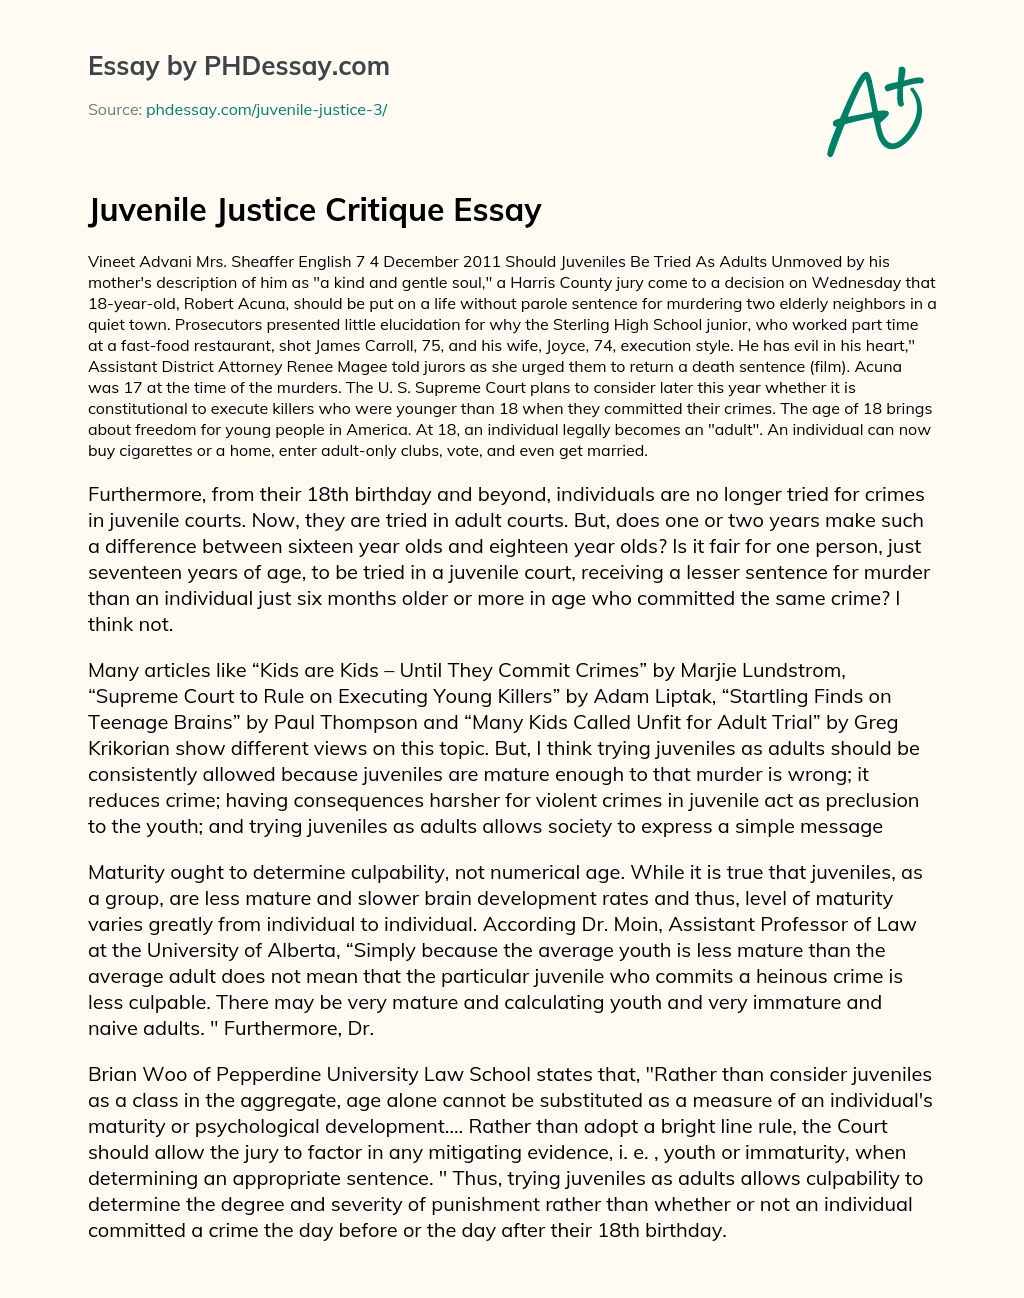 Juvenile Justice Critique Essay essay